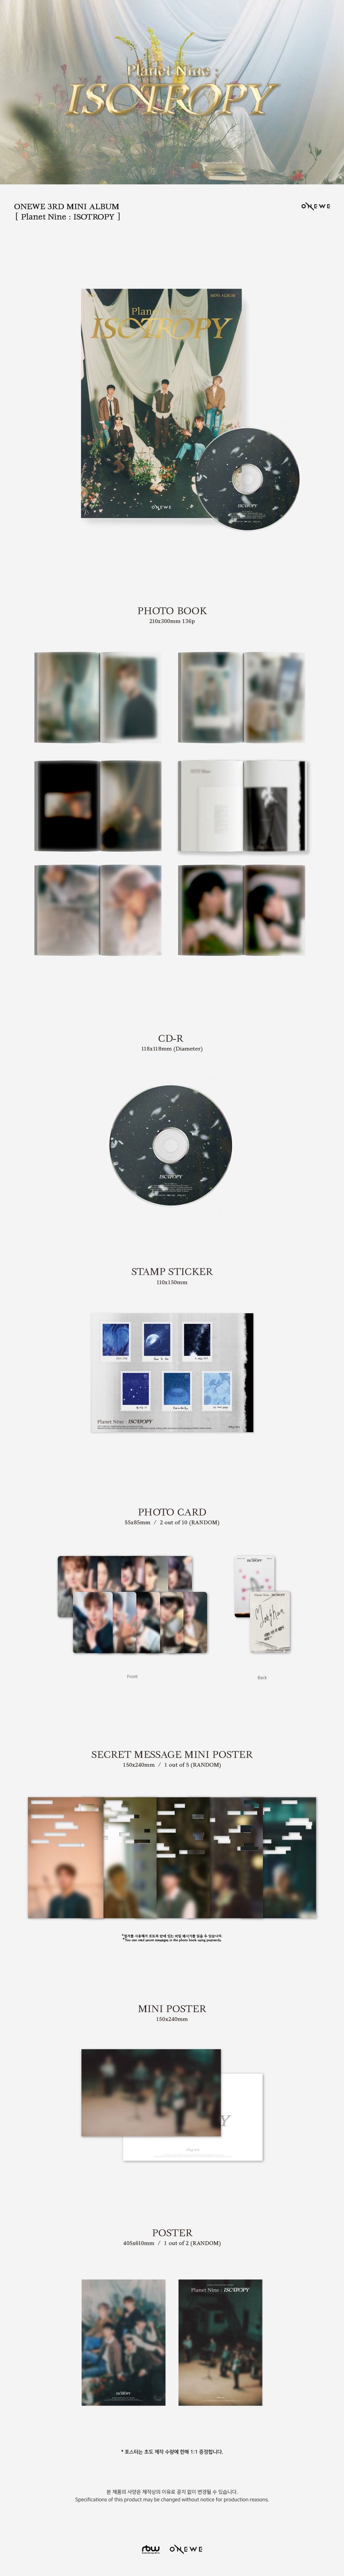 ONEWE - Planet Nine : ISOTROPY [3rd Mini Album]